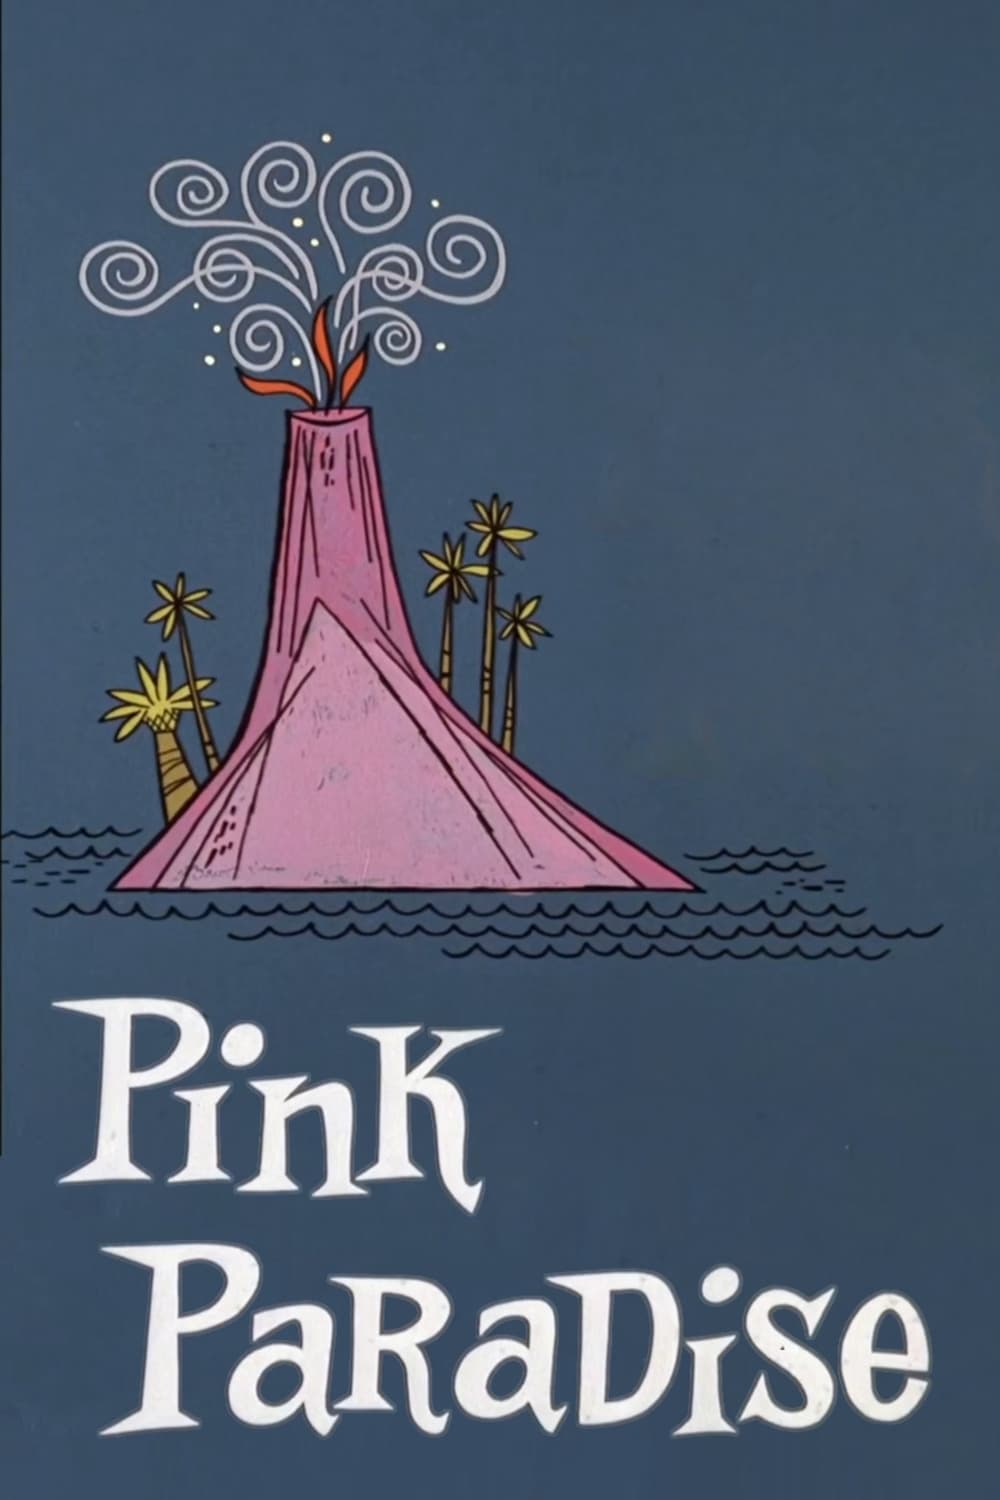 Pink Paradise (1967)